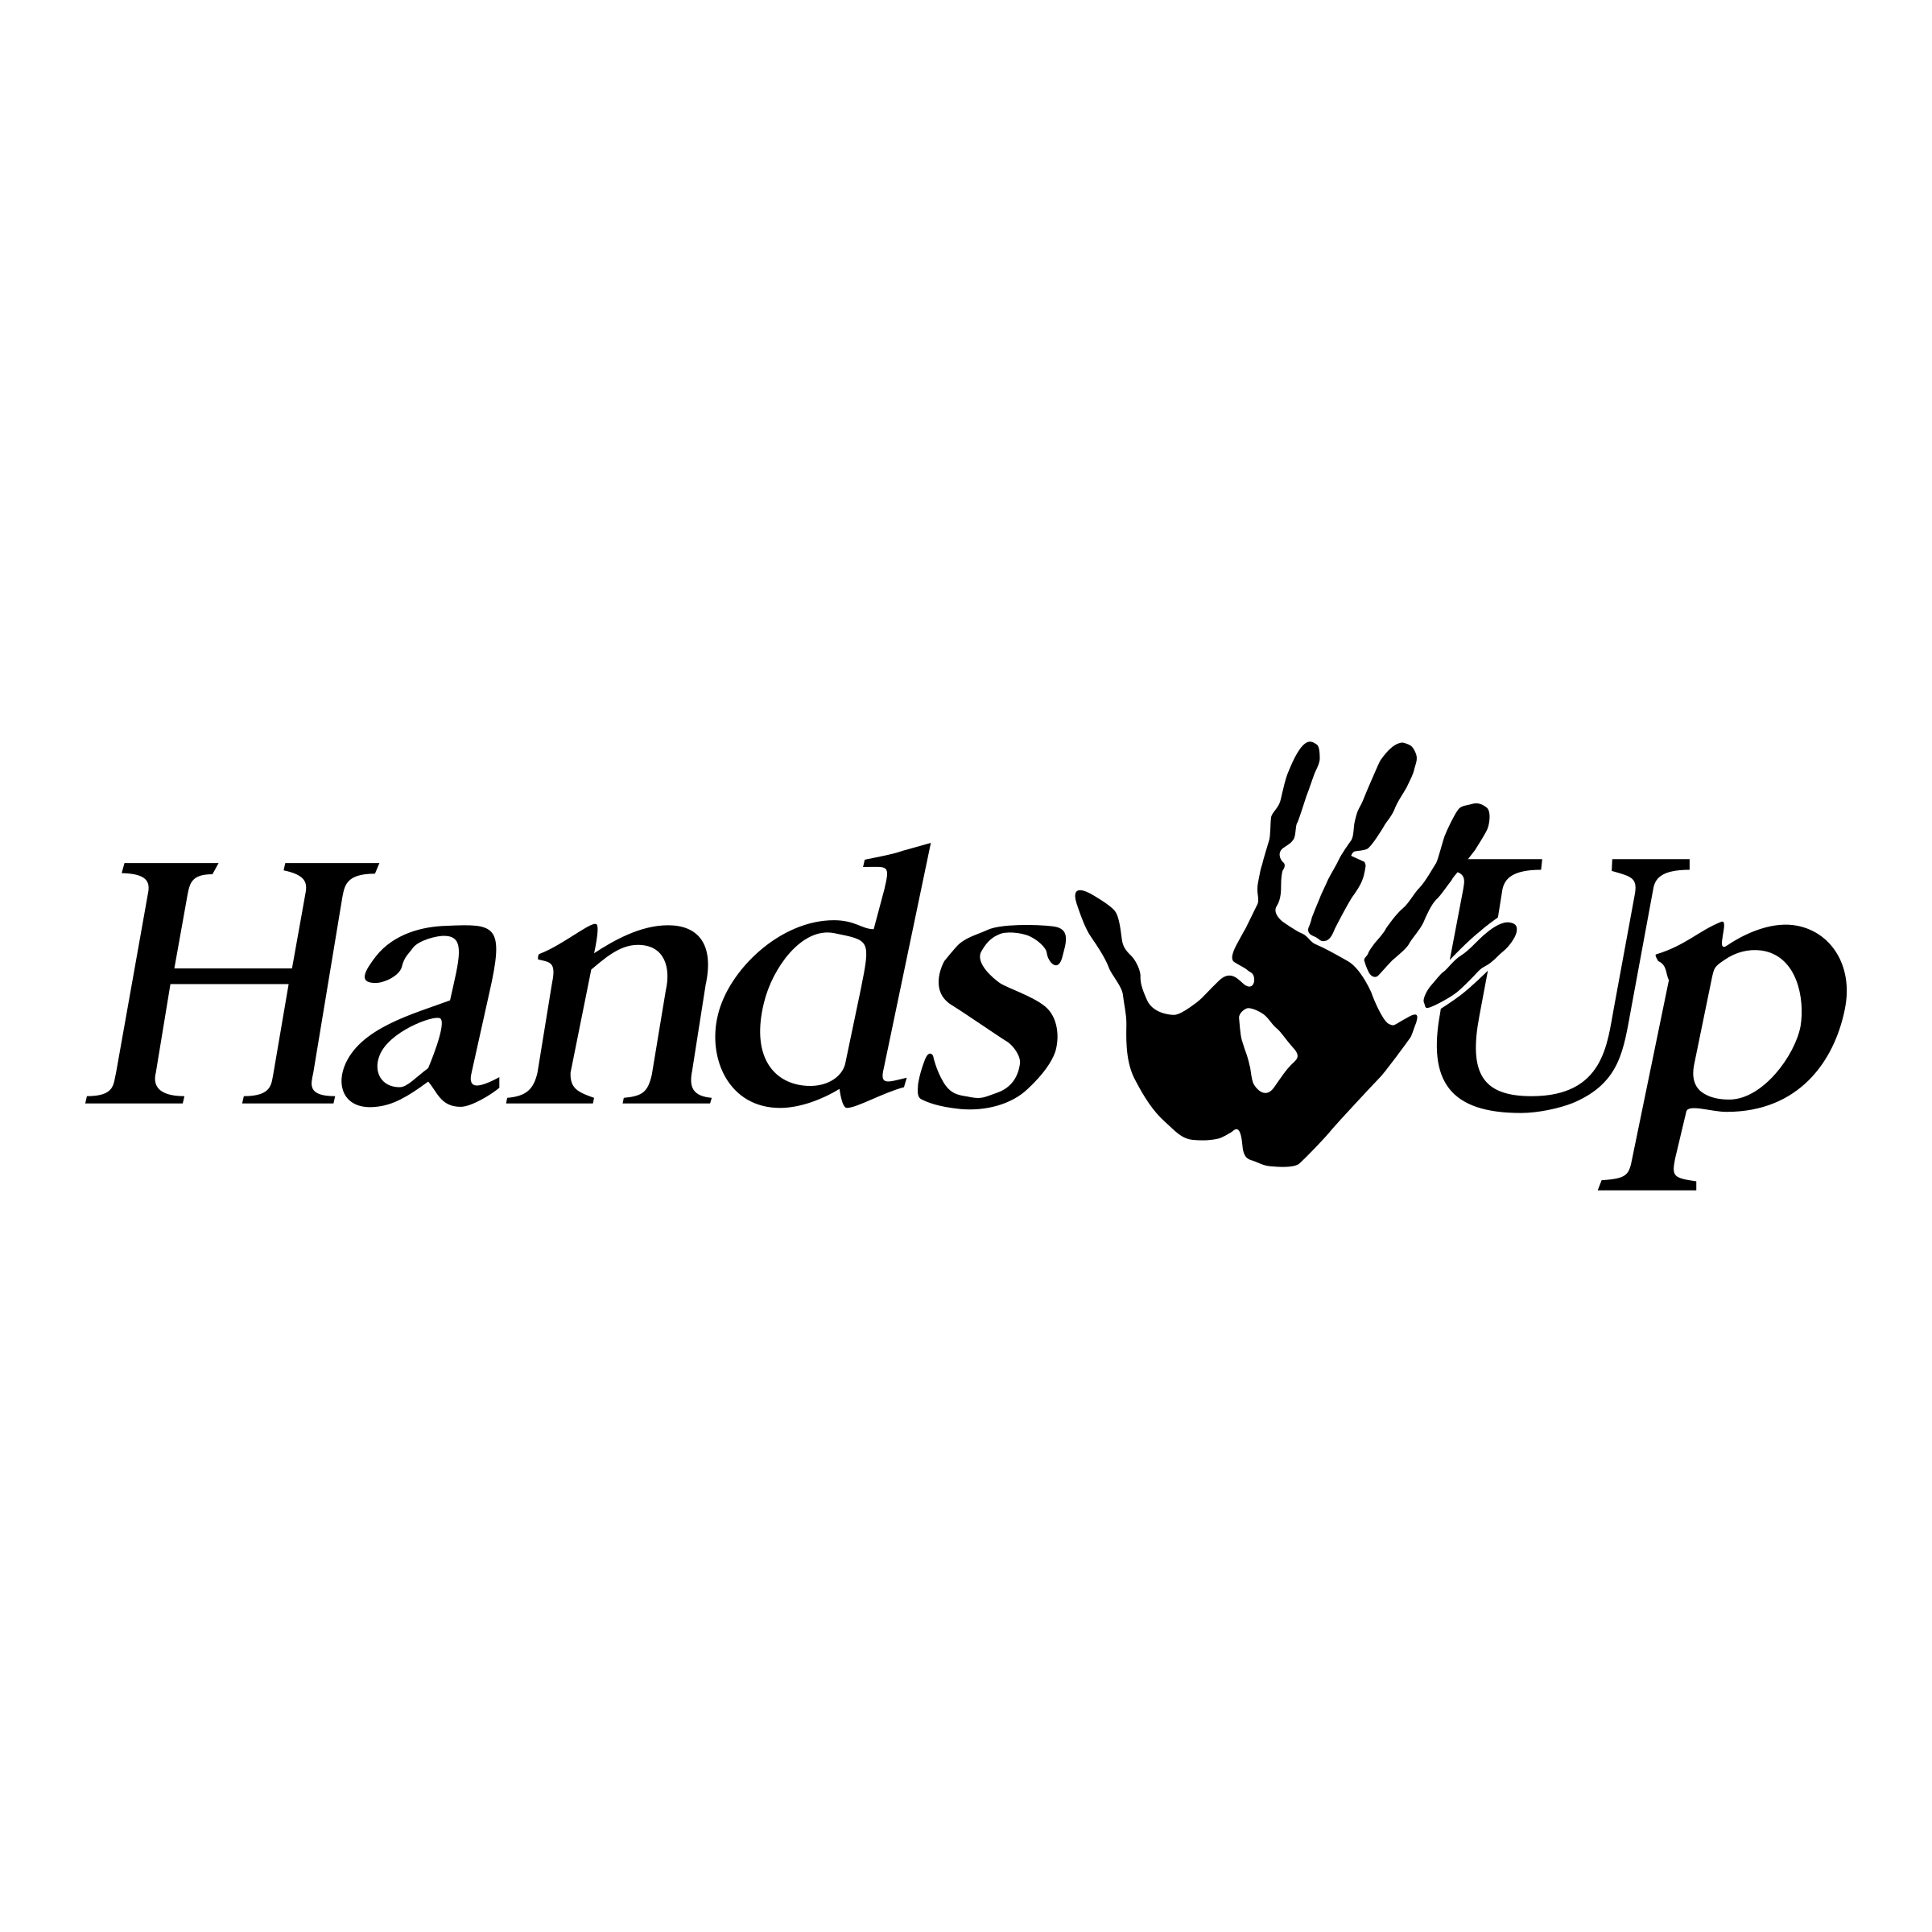 HandsUp Logo - Hands Up Logo PNG Transparent & SVG Vector - Freebie Supply